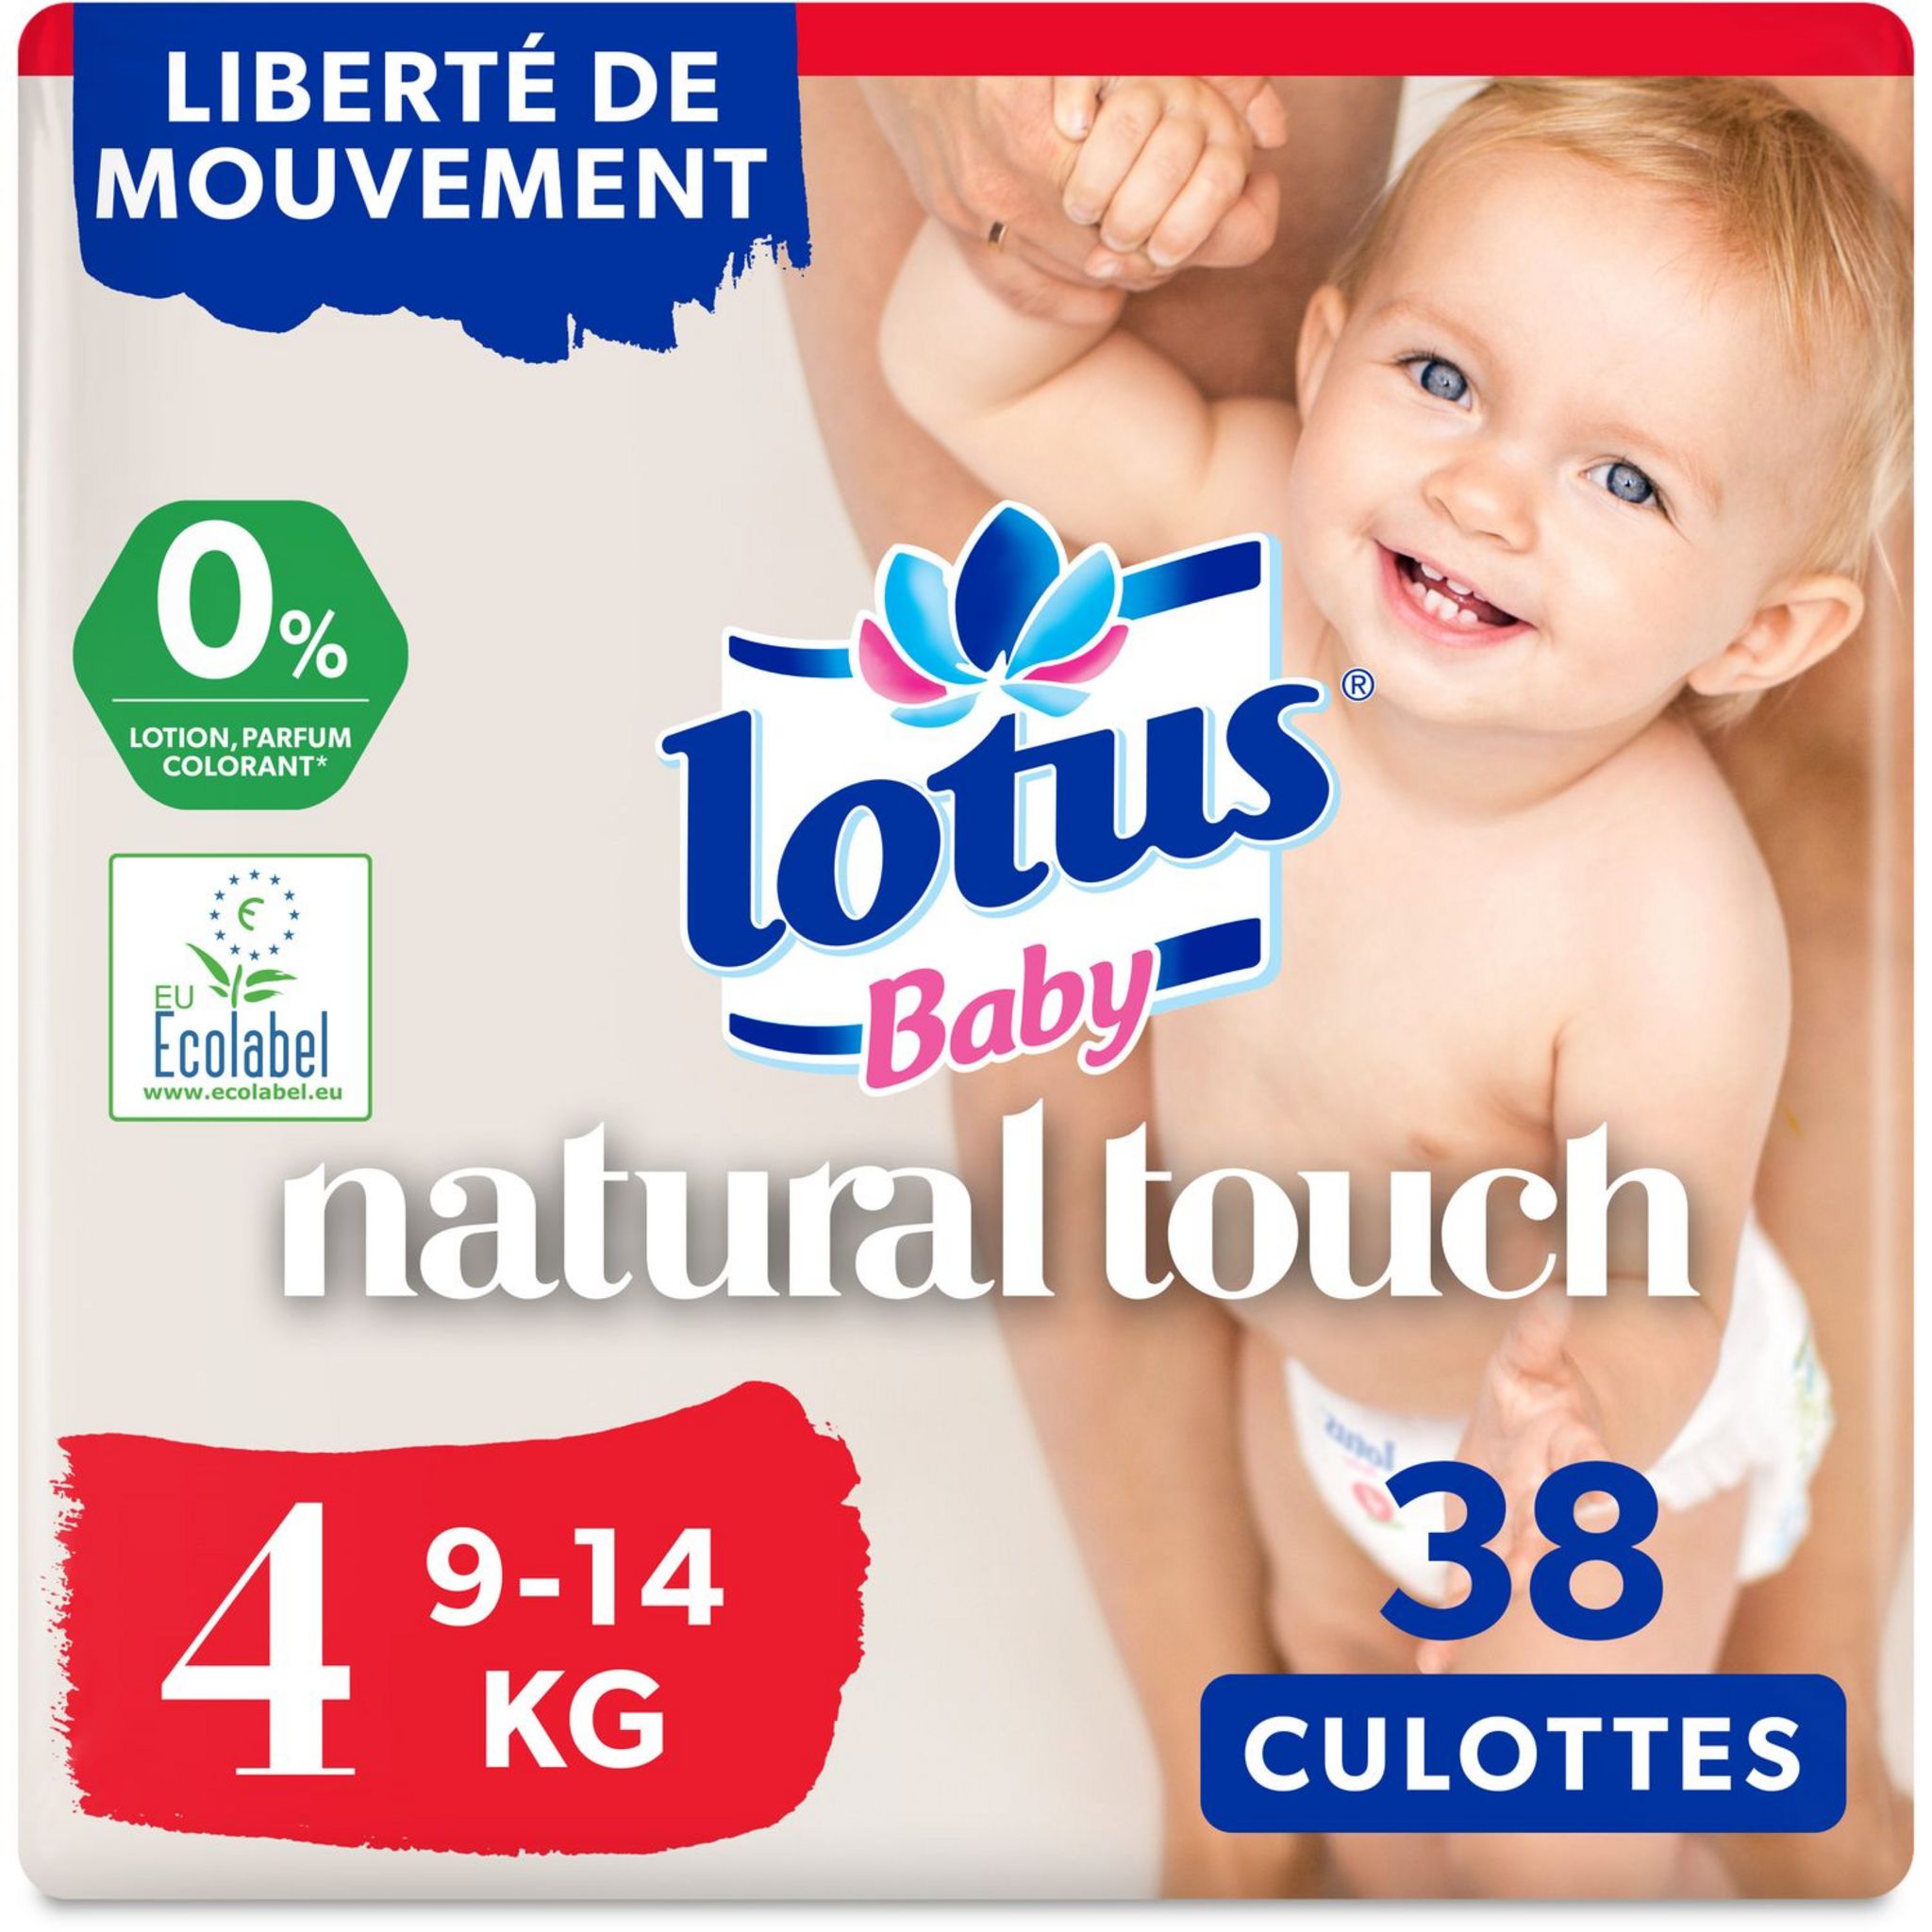 Lotus Baby Douceur Naturelle - Culottes Taille 4 (9-14 kg) Pack 1